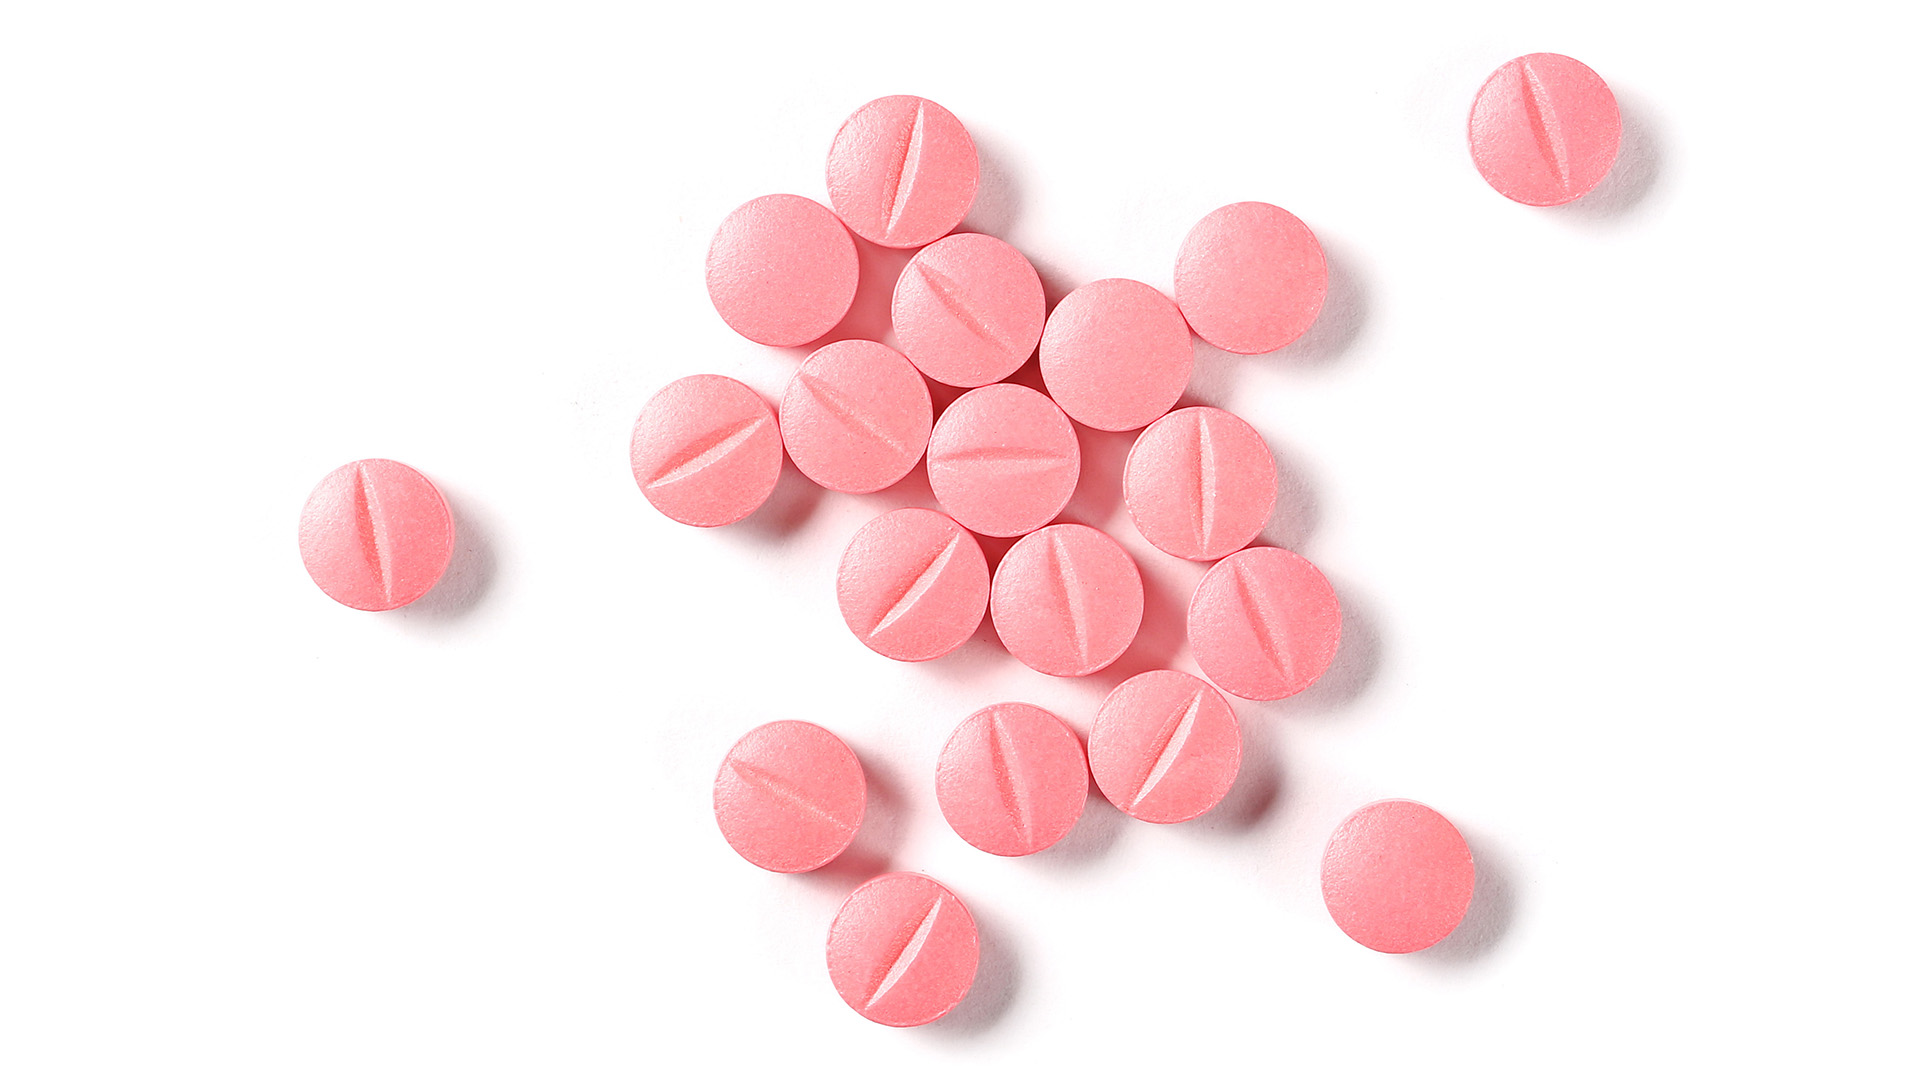 Розовые таблетки название. Розовые таблетки. Розовые круглые таблетки. Ярко розовые таблетки. Маленькие розовые таблетки.